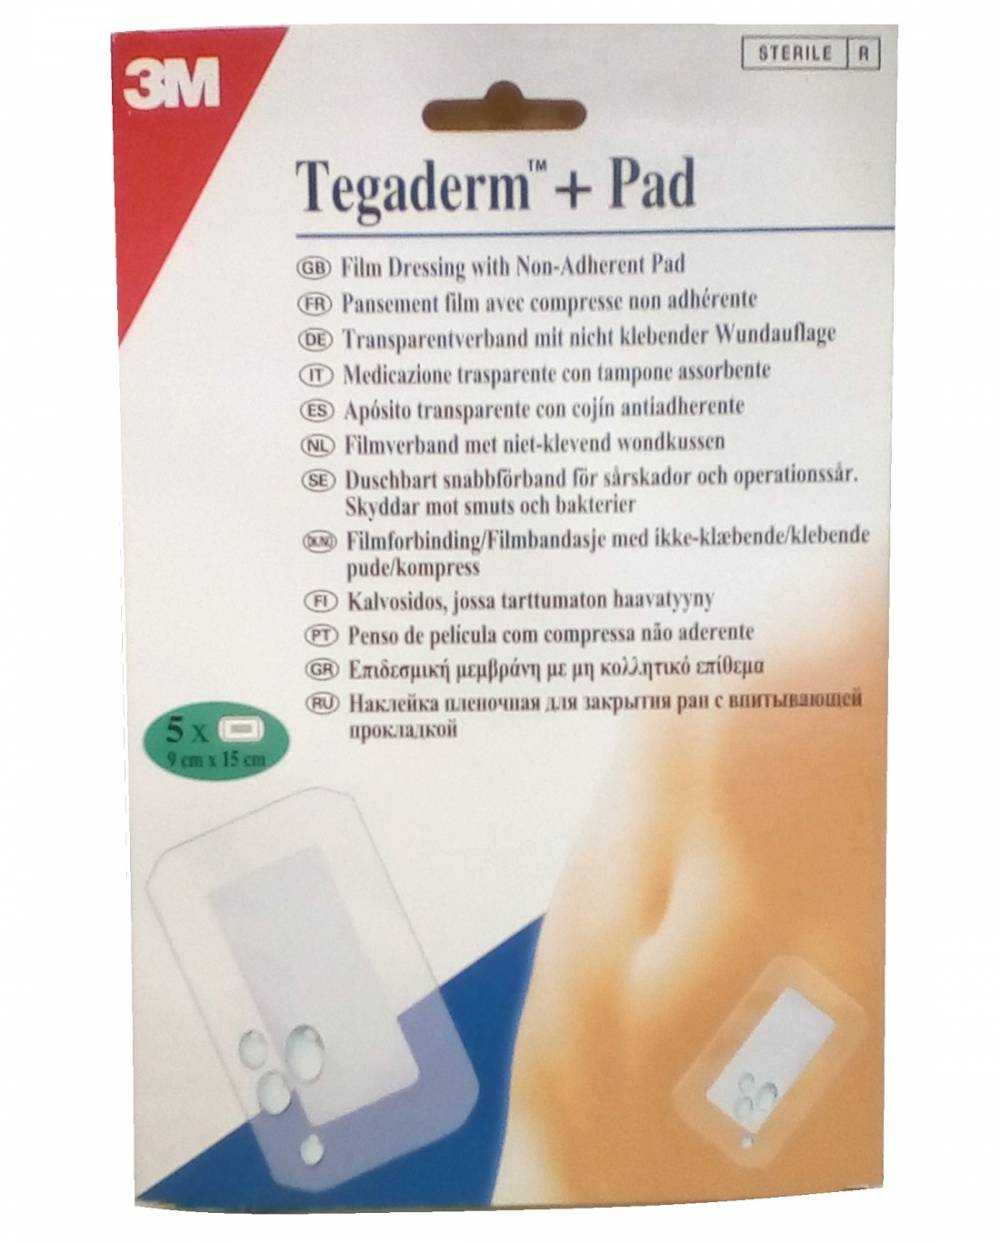 Tegaderm + pad (9x15 cm) - 5 unidades N